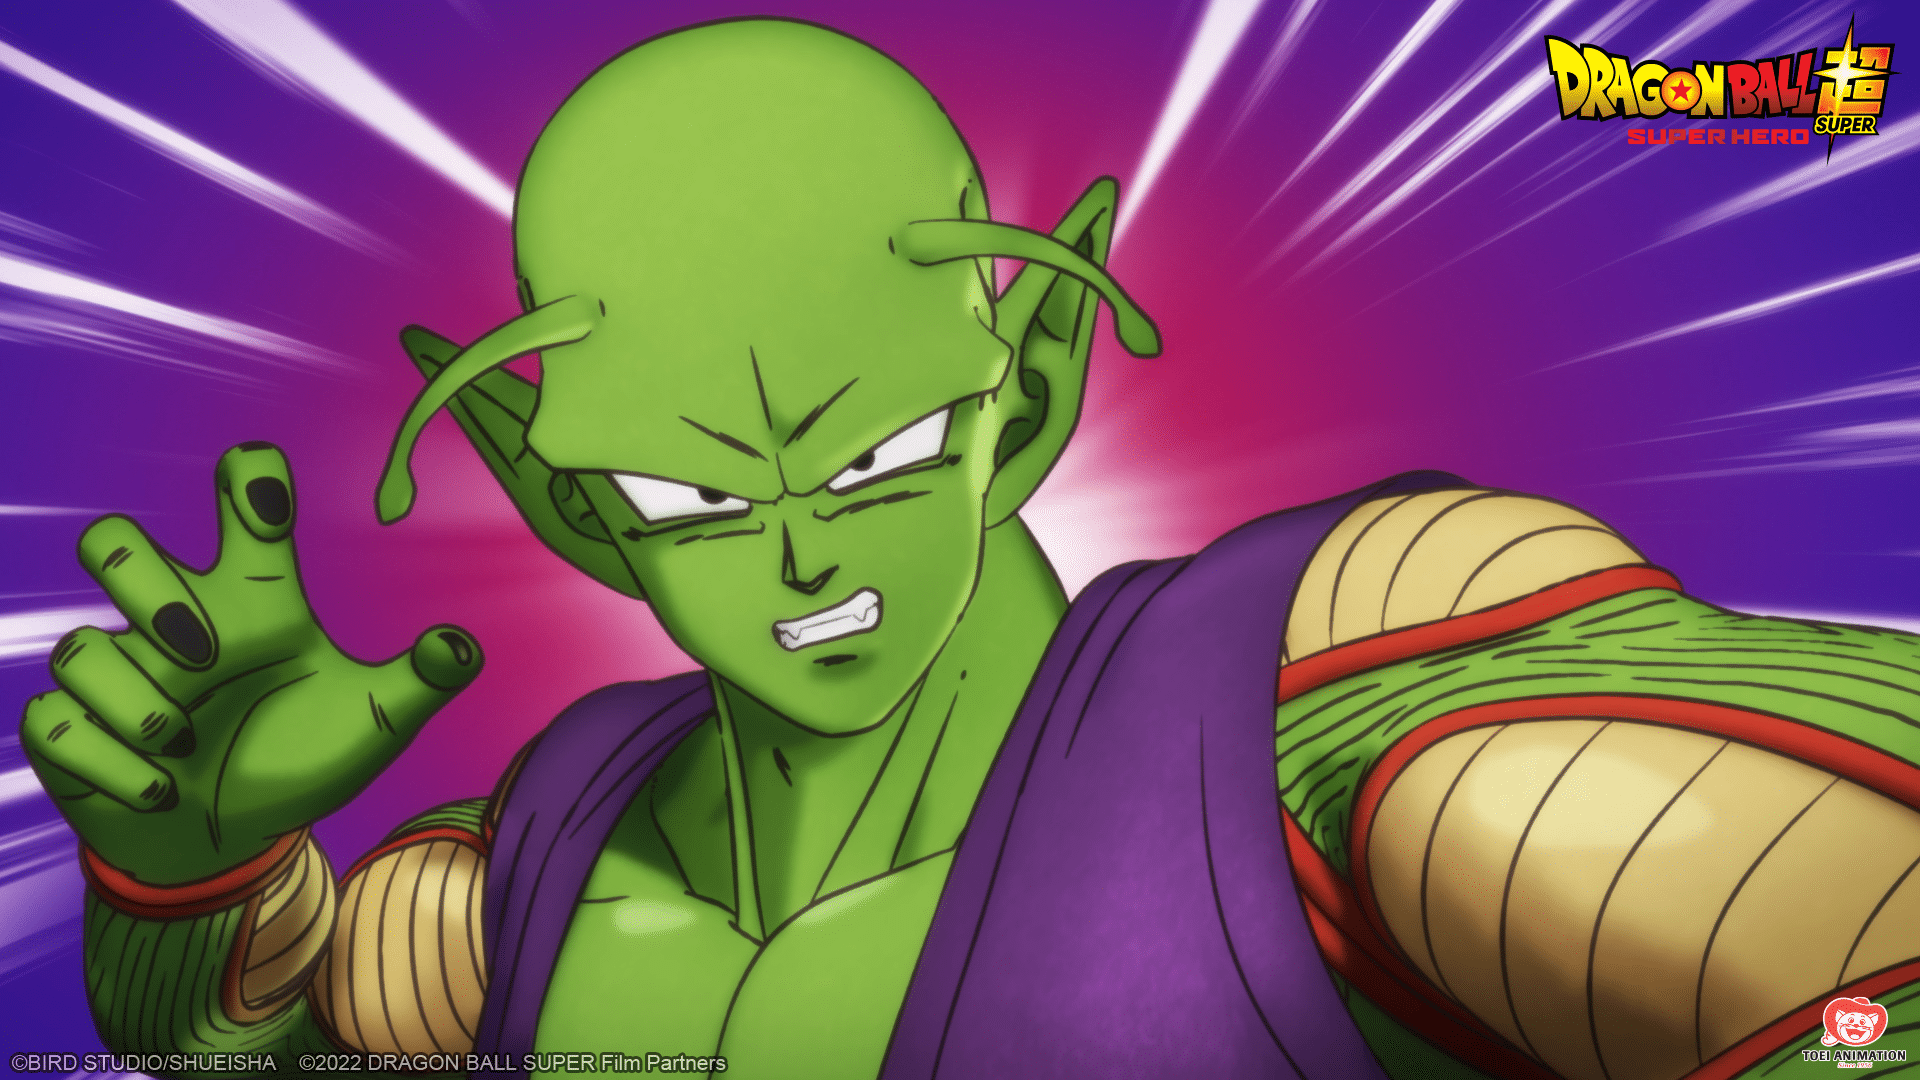 Piccolo in Dragon Ball Super: SUPER HERO. Art © Toei Animation, Crunchyroll, Sony Pictures